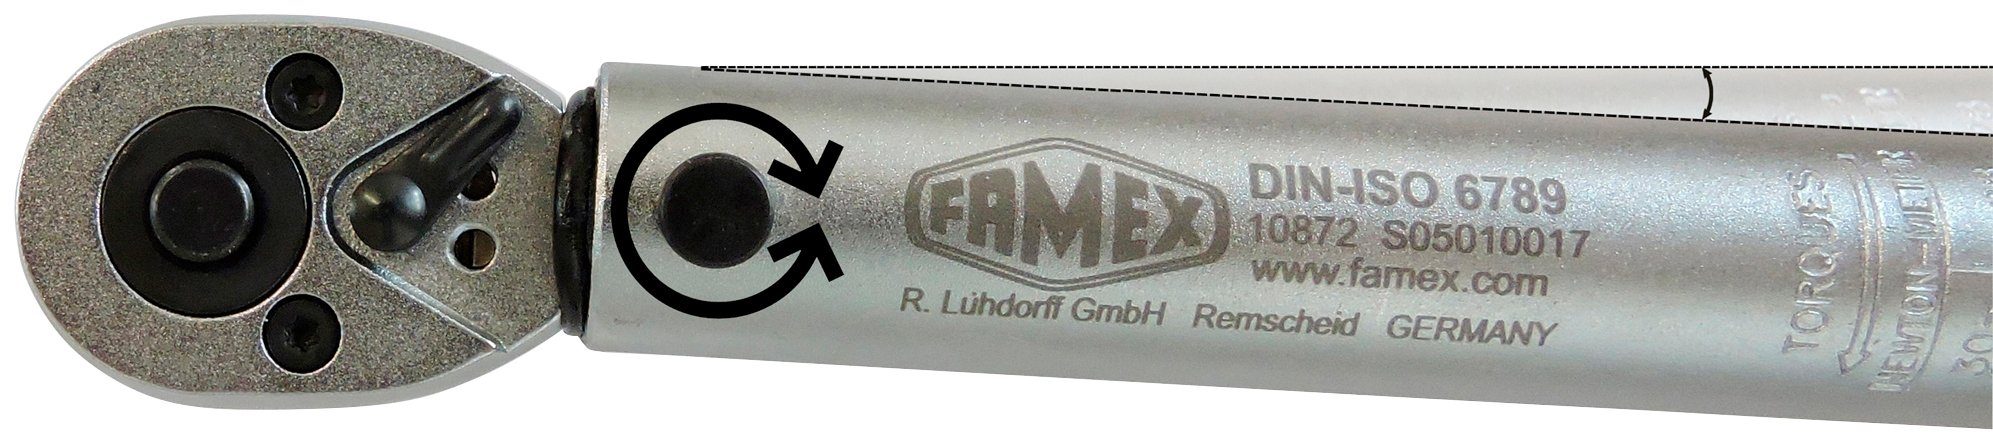 FAMEX Drehmomentschlüssel Pro R+L